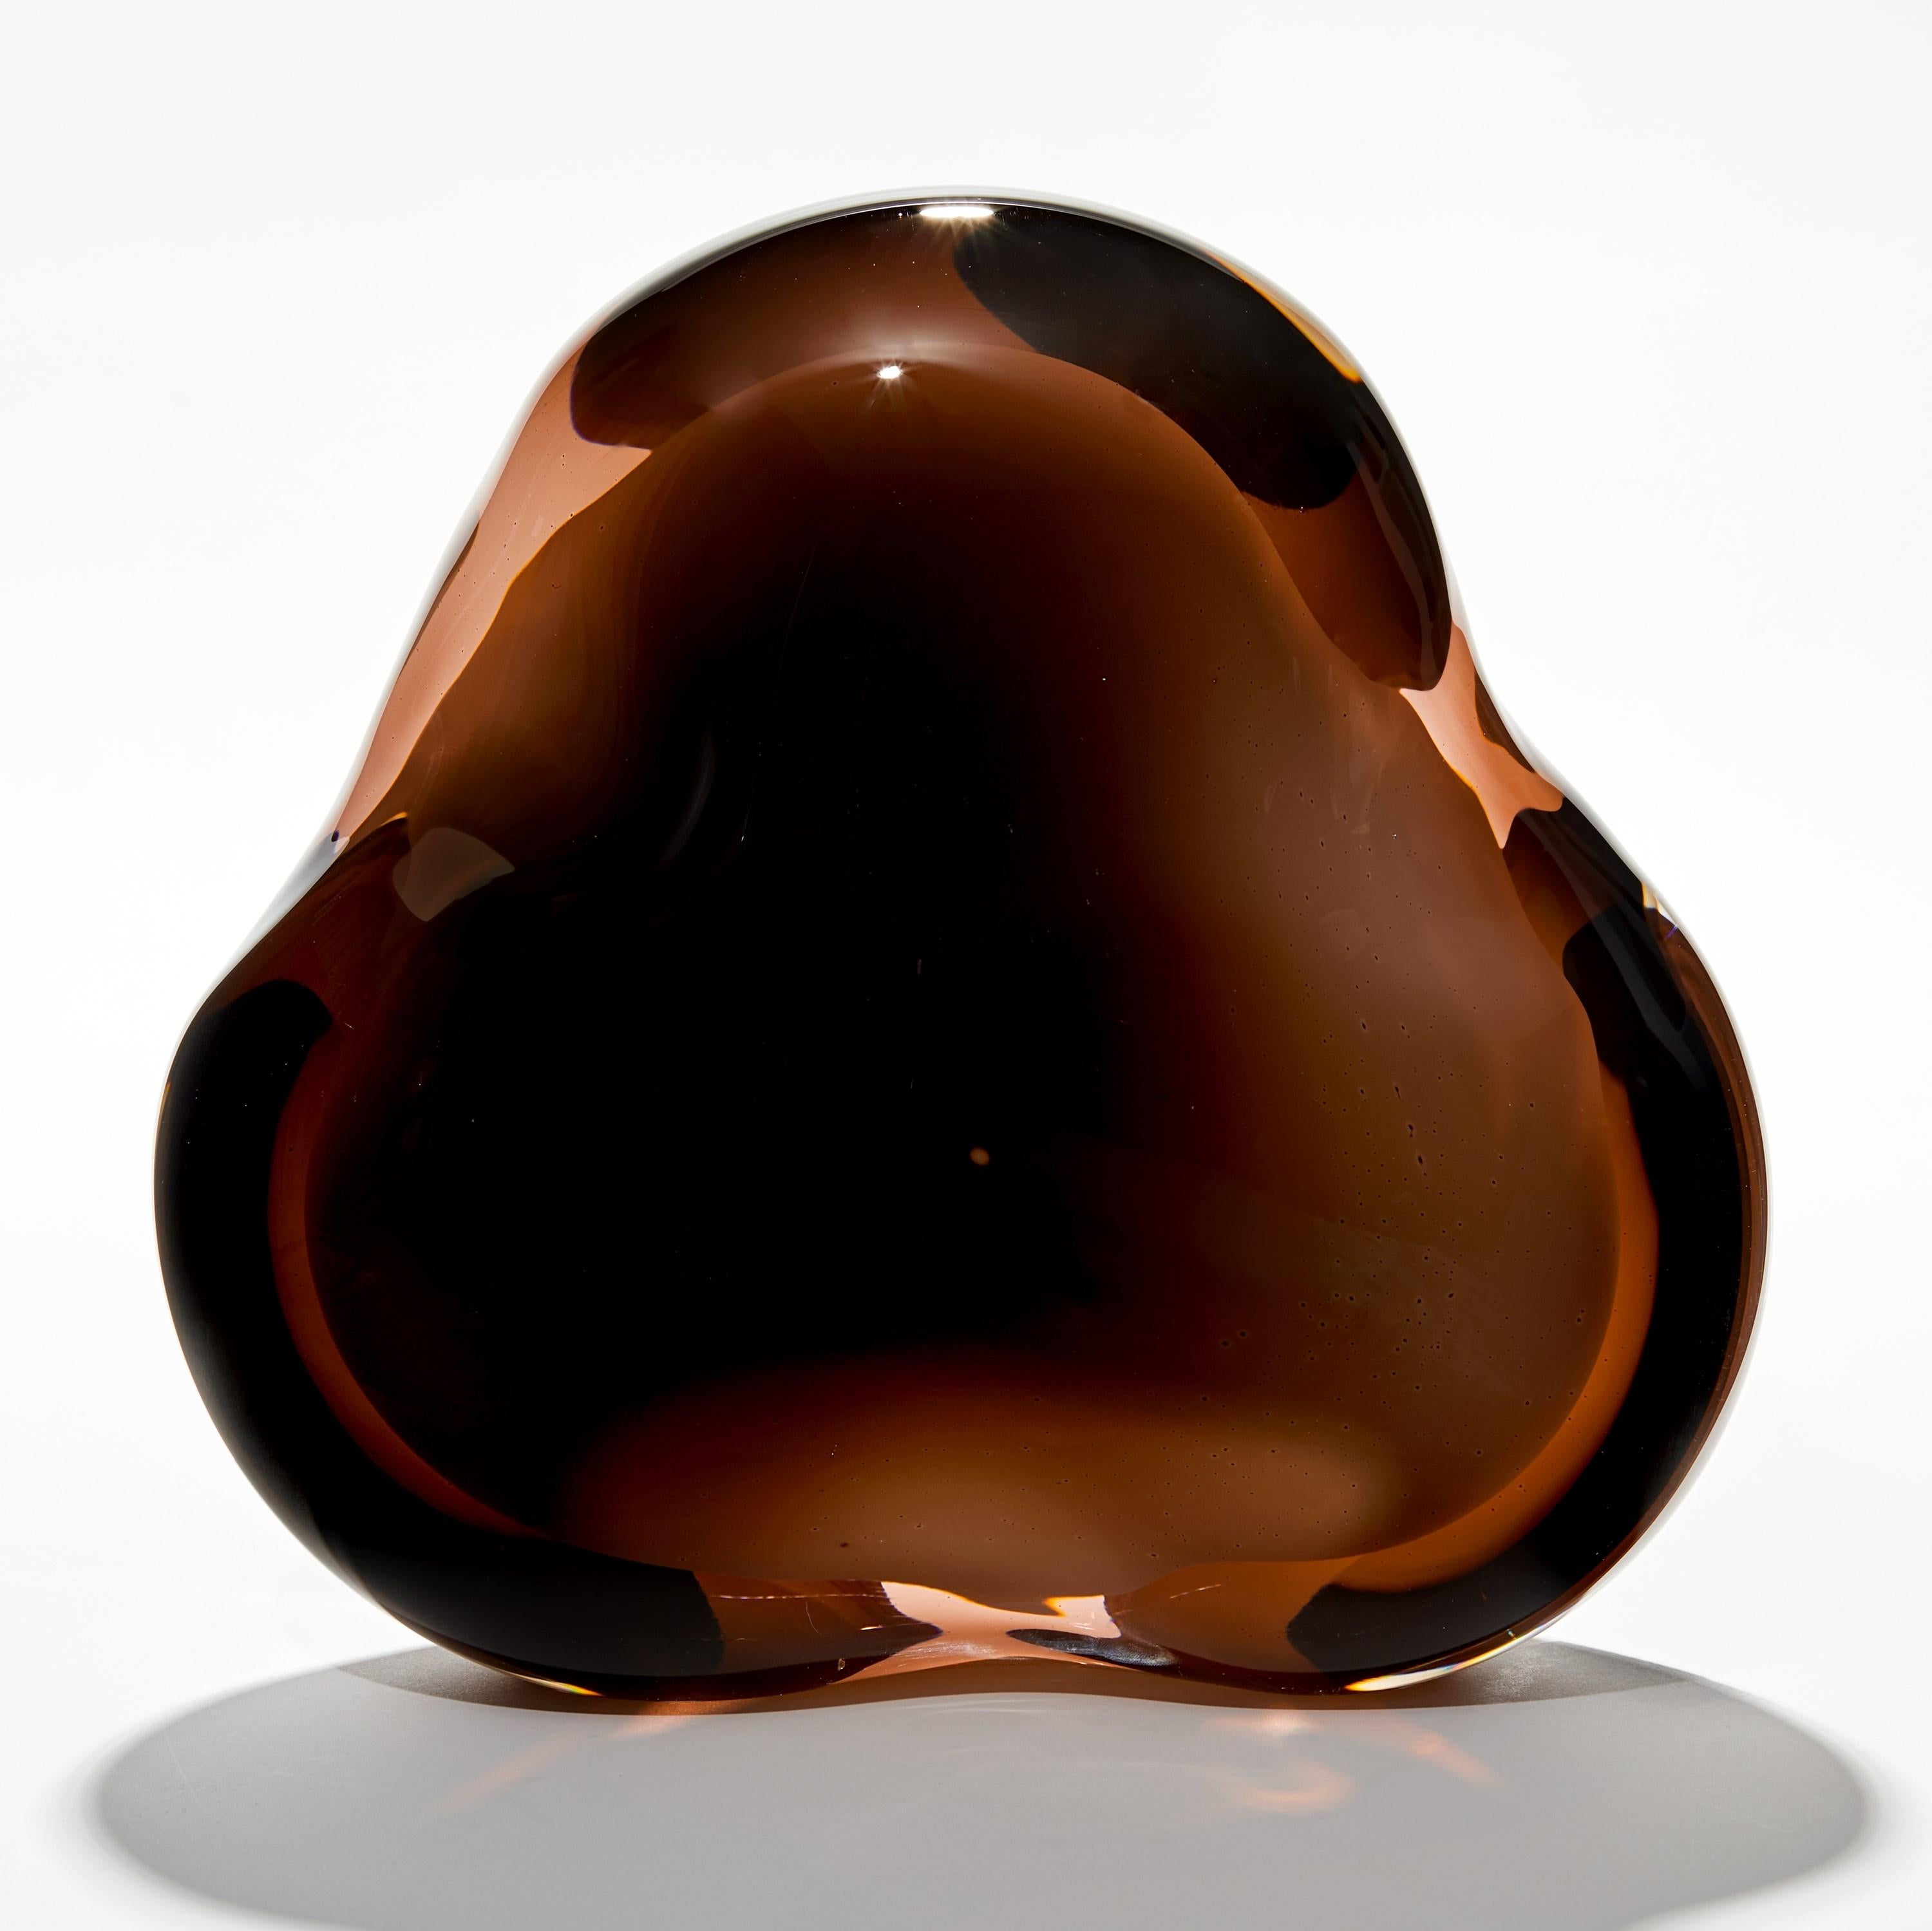 Organic Modern Chromatic Vug in Dark Amber to Olive, Glass Sculpture by Samantha Donaldson